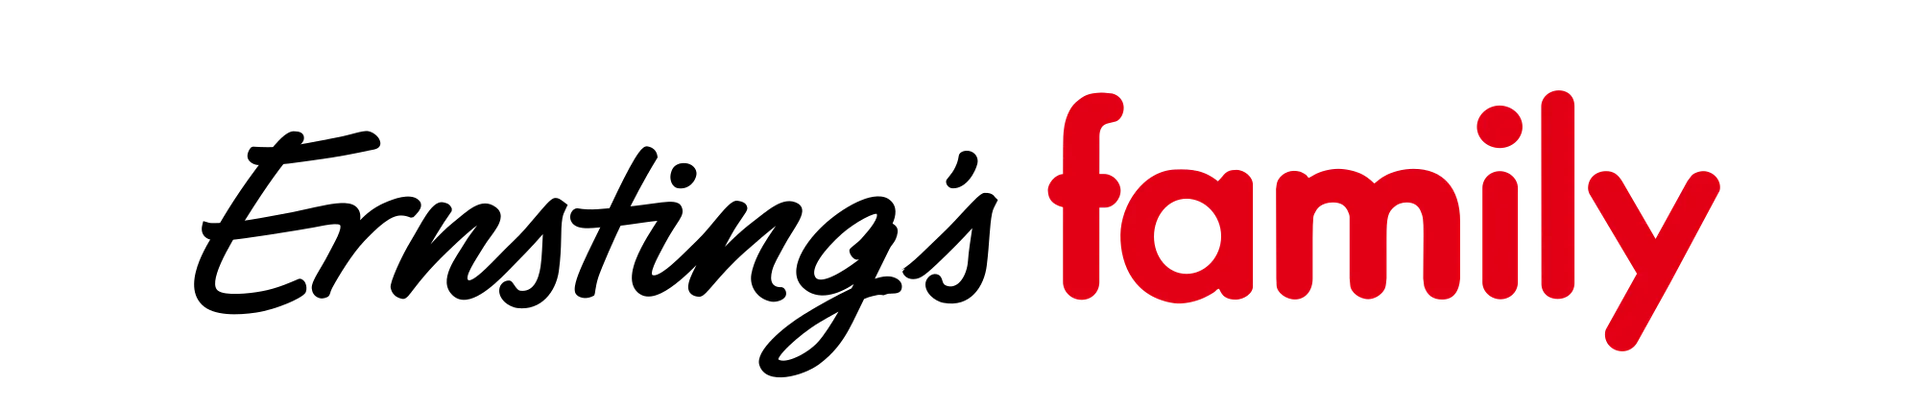 ERNSTING'S FAMILY logo die aktuell Flugblatt